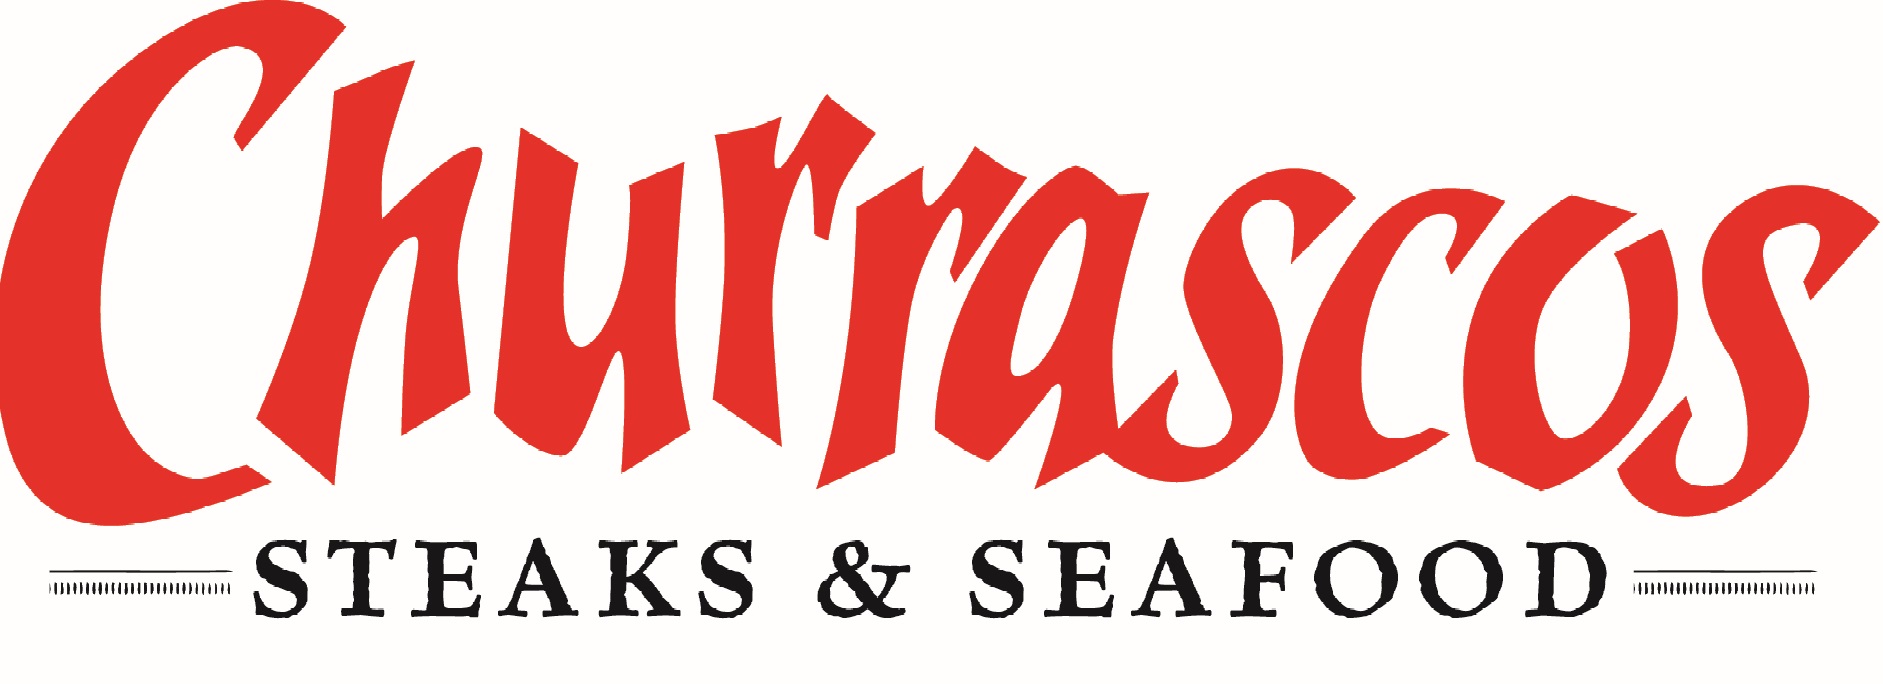 Churrascos-Logo-2-1.jpg